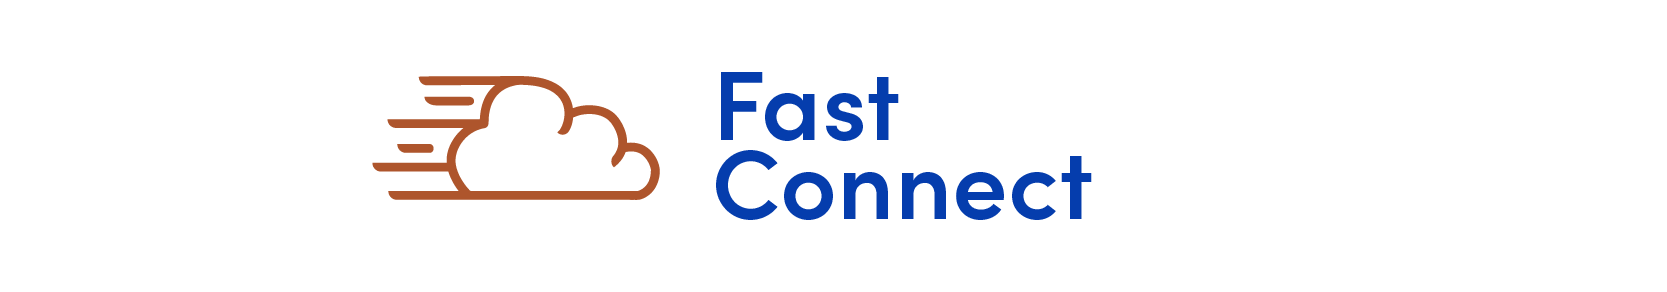 TC Web_IAAS Headings-fast-connect